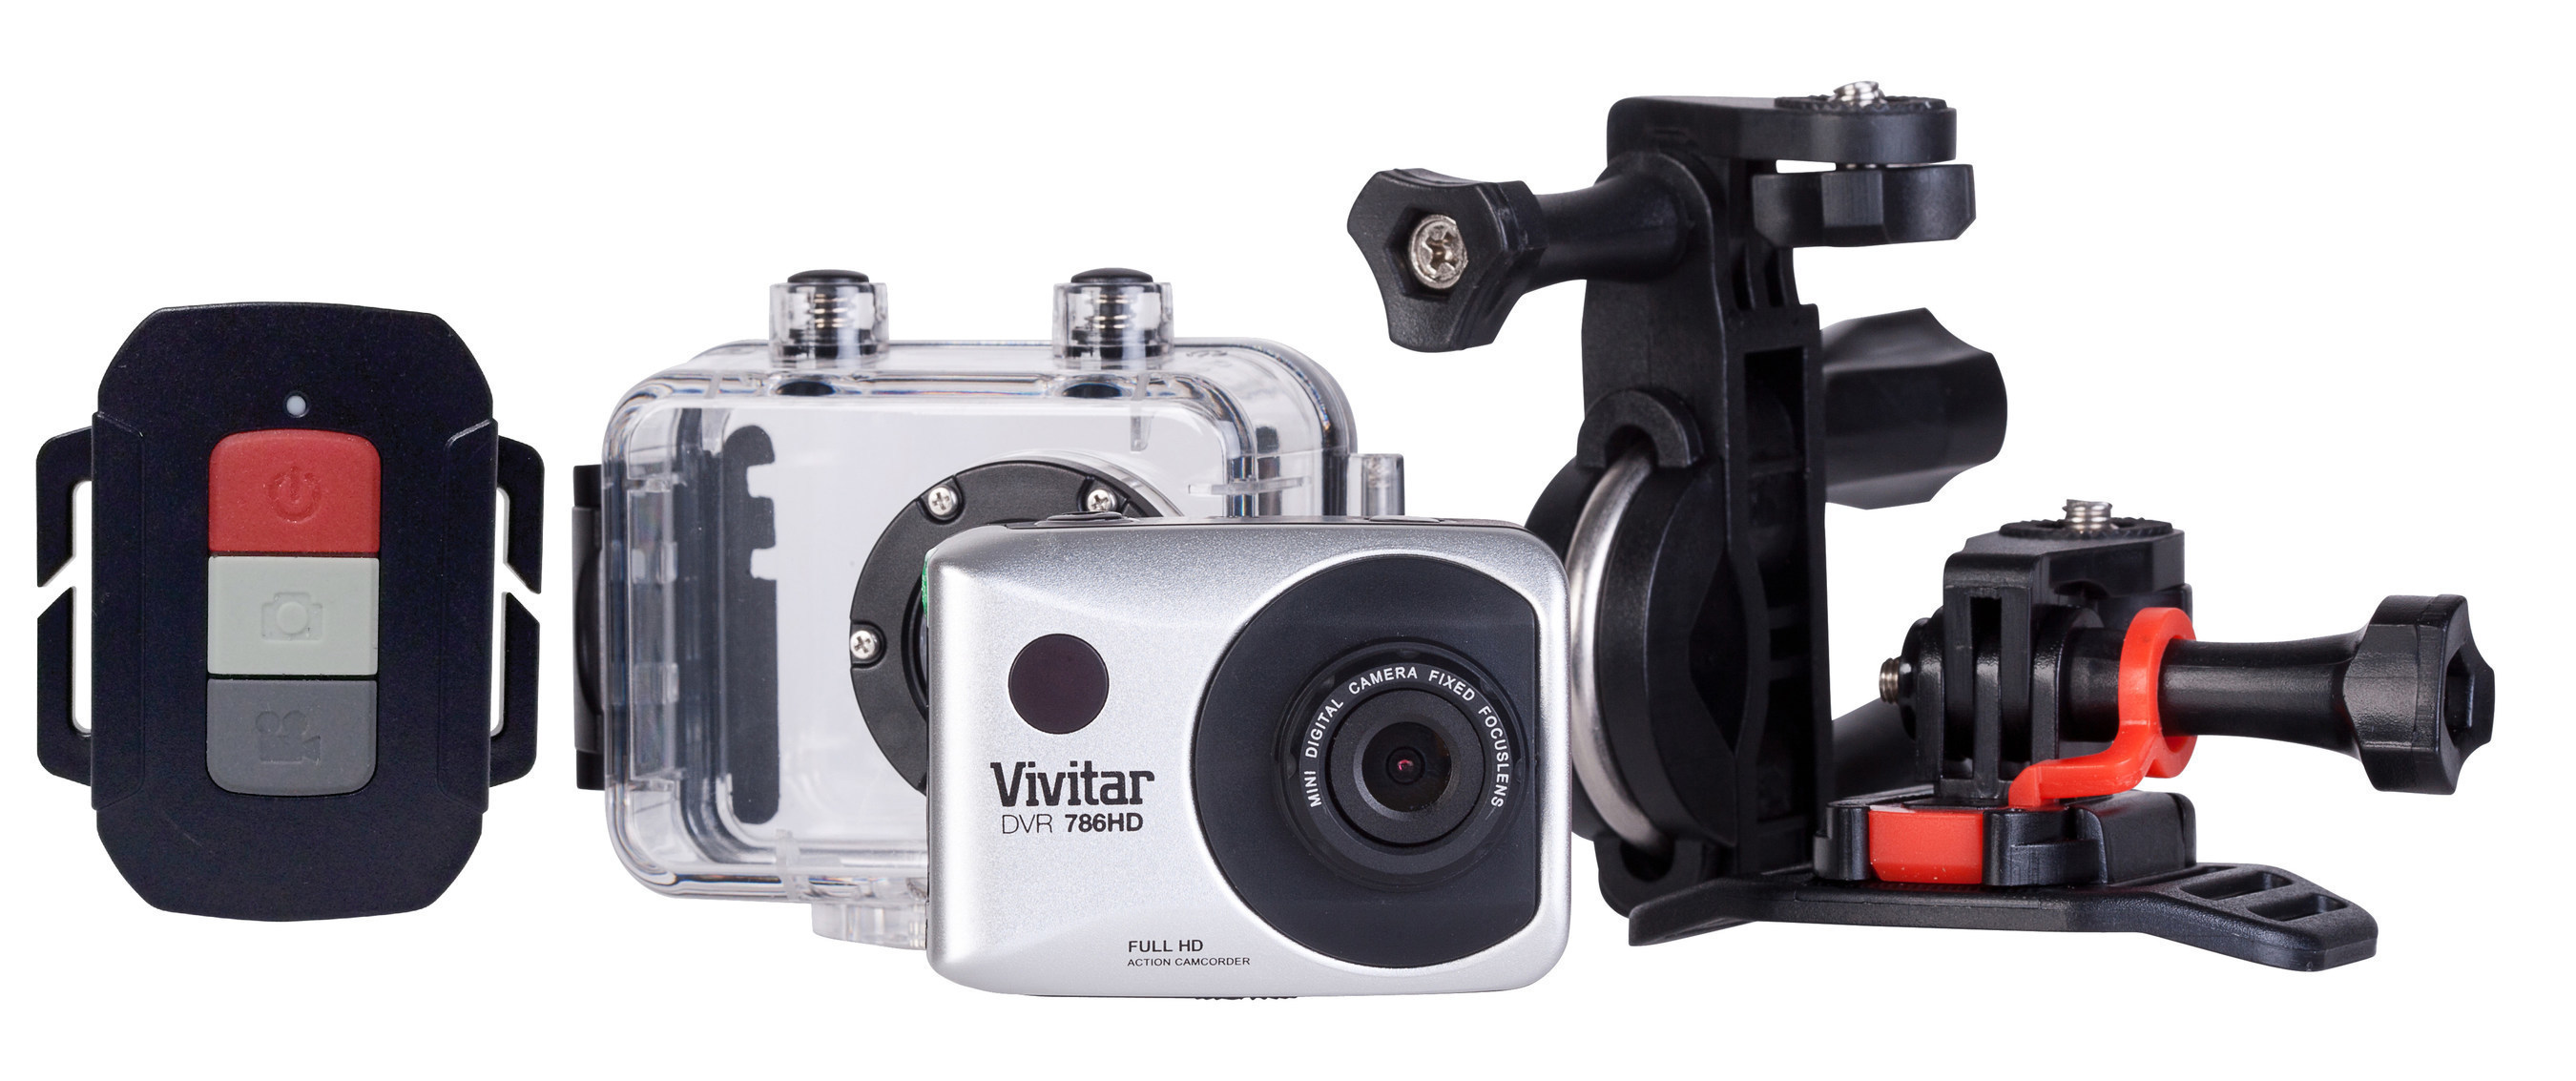 Vivitar's DVR786 Action Camera